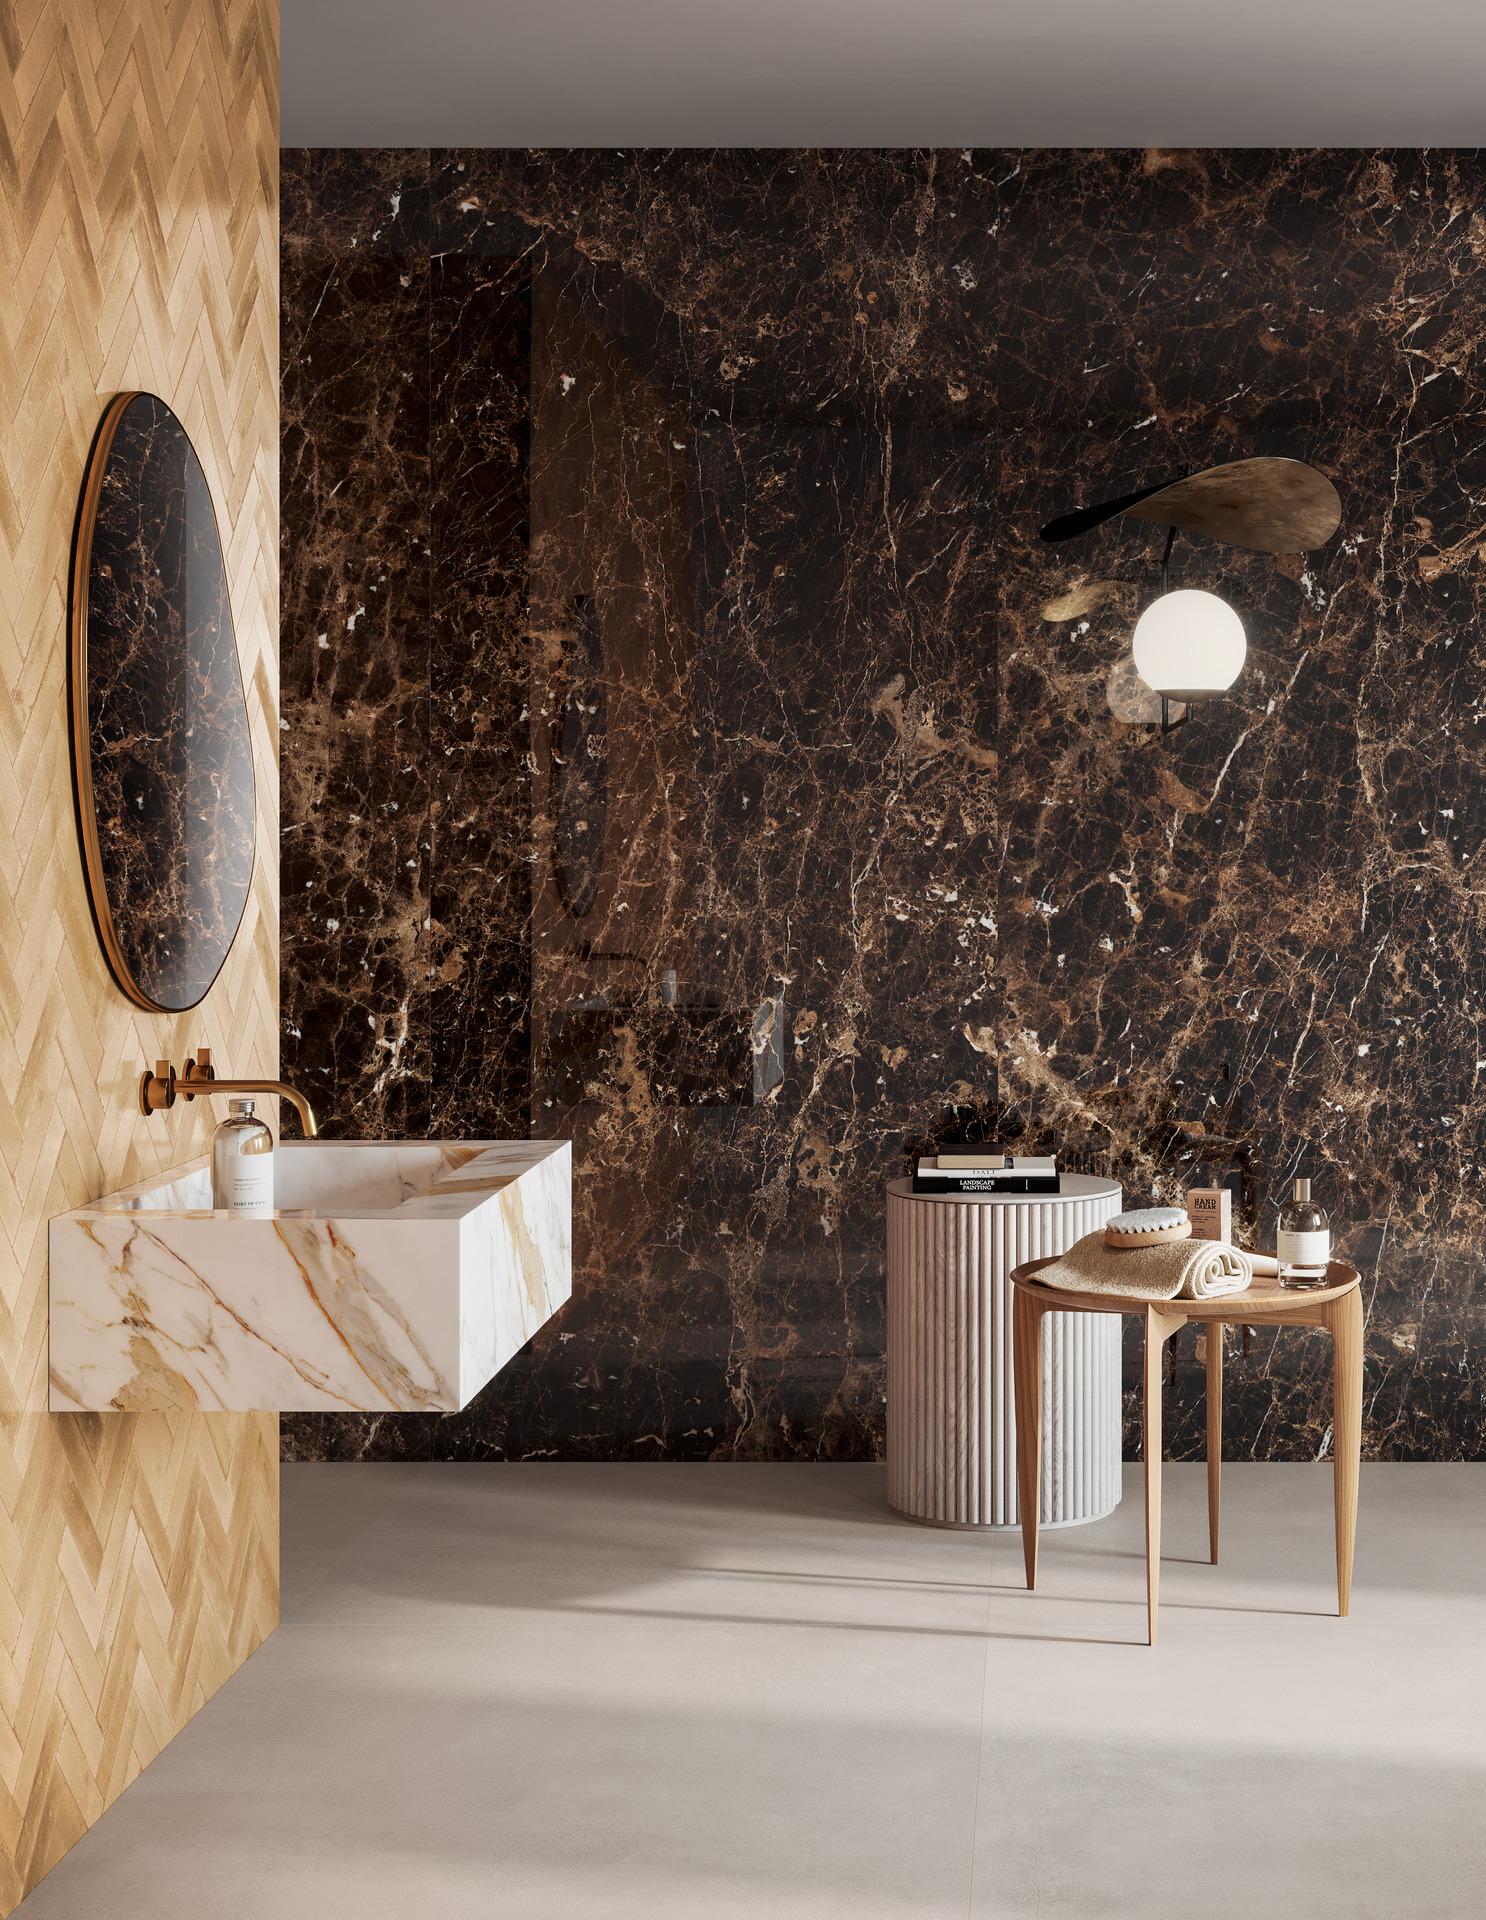 Et delikat bad i marmor som kombinerer marmorfliser, med små gule historiske fliser på vegg. Vask laget i marmorflis og gulvflis i betonglook.